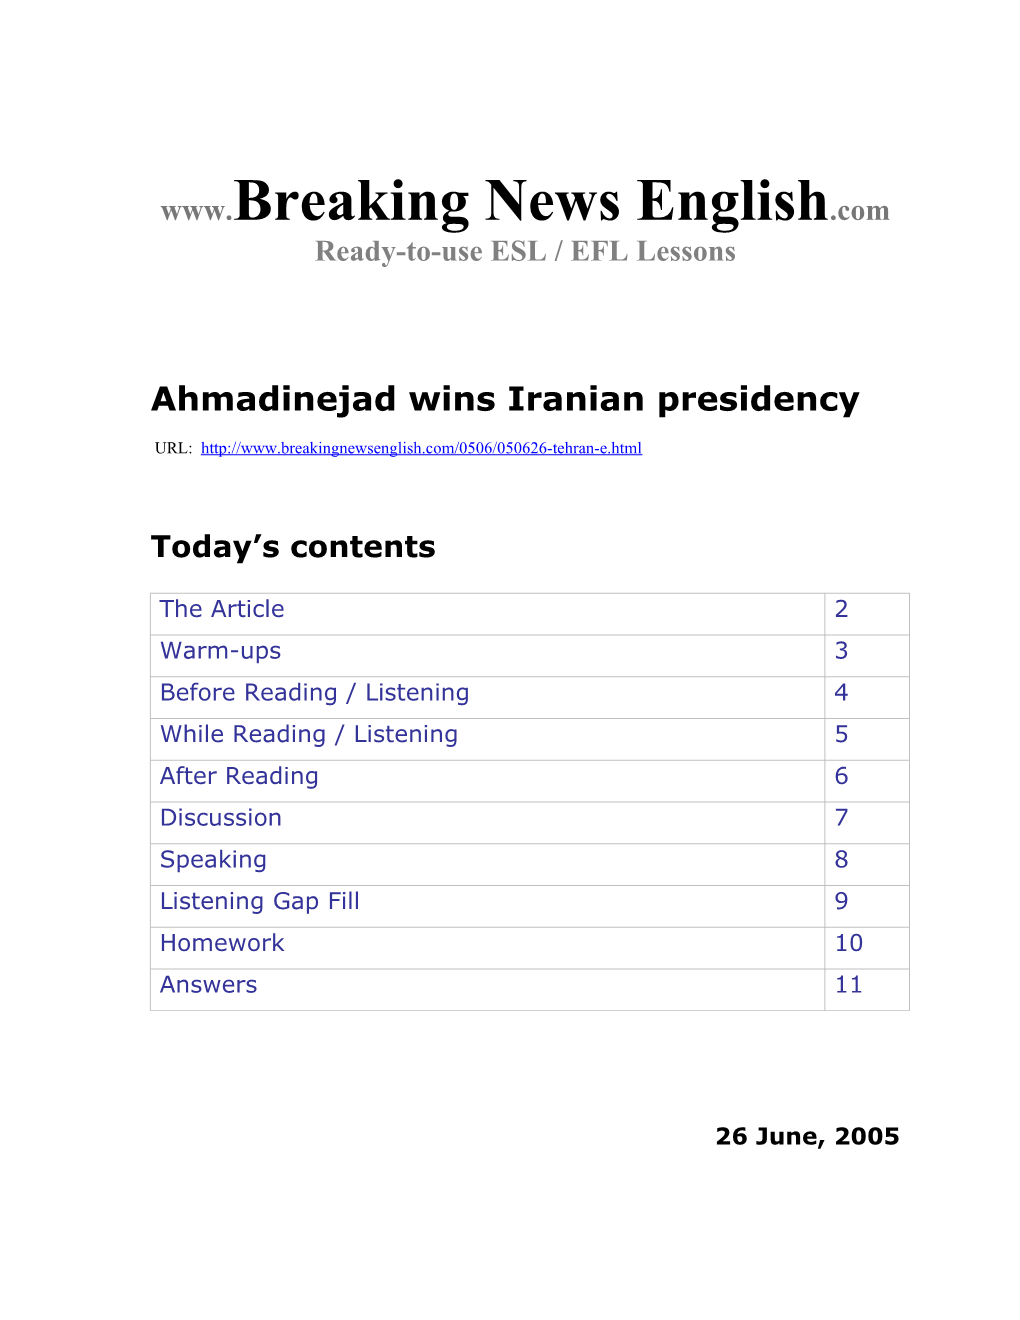 Ahmadinejad Wins Iranian Presidency